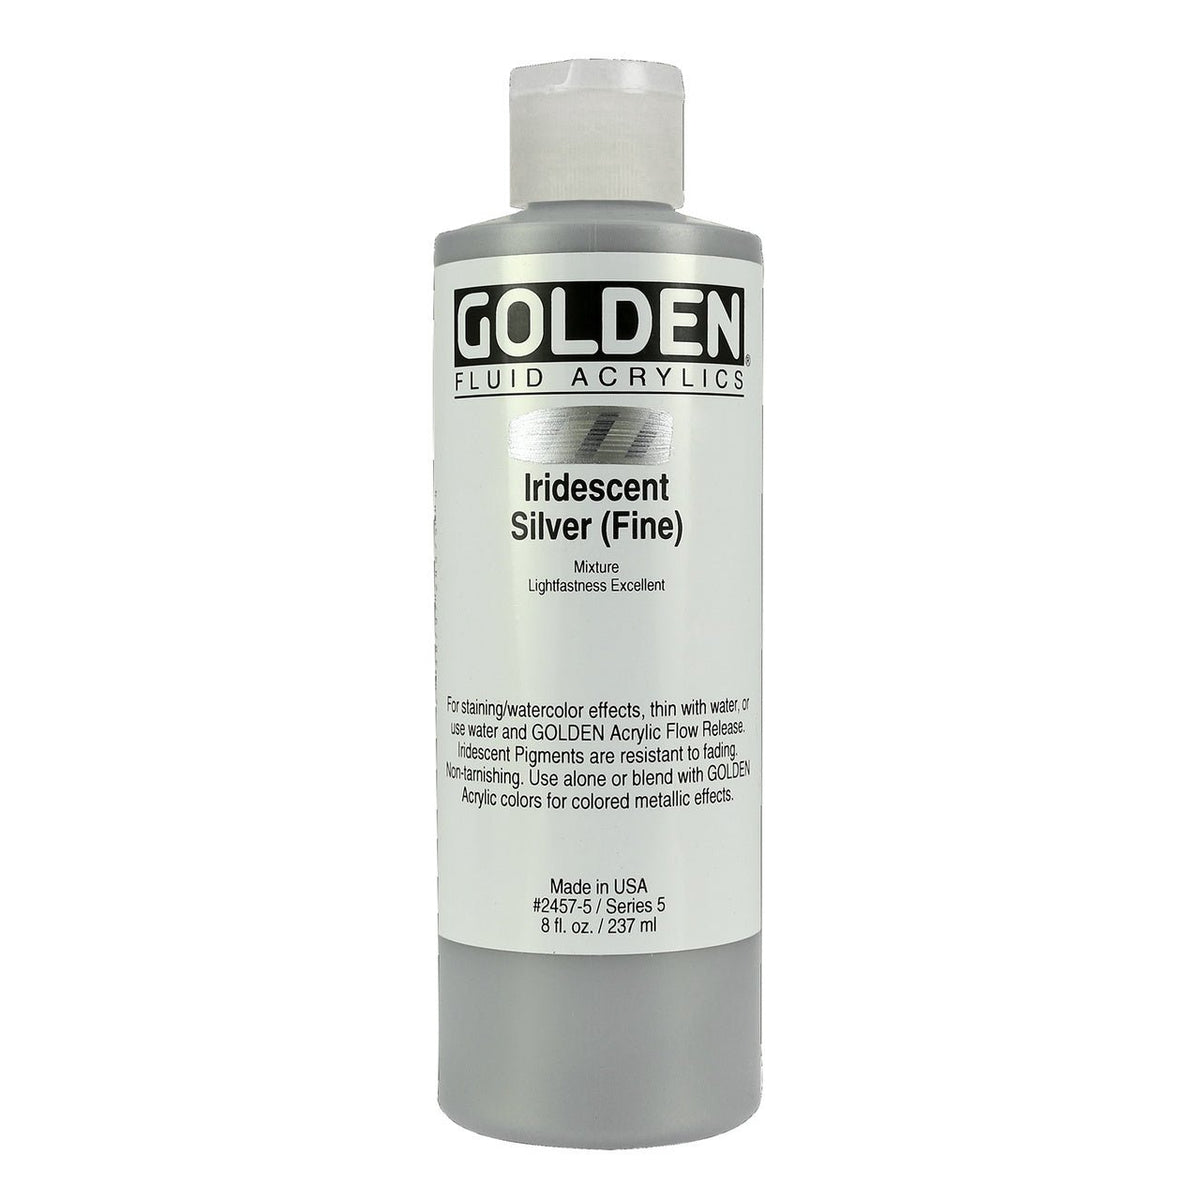 Golden Fluid Acrylic Iridescent Silver (fine) 8 oz - merriartist.com